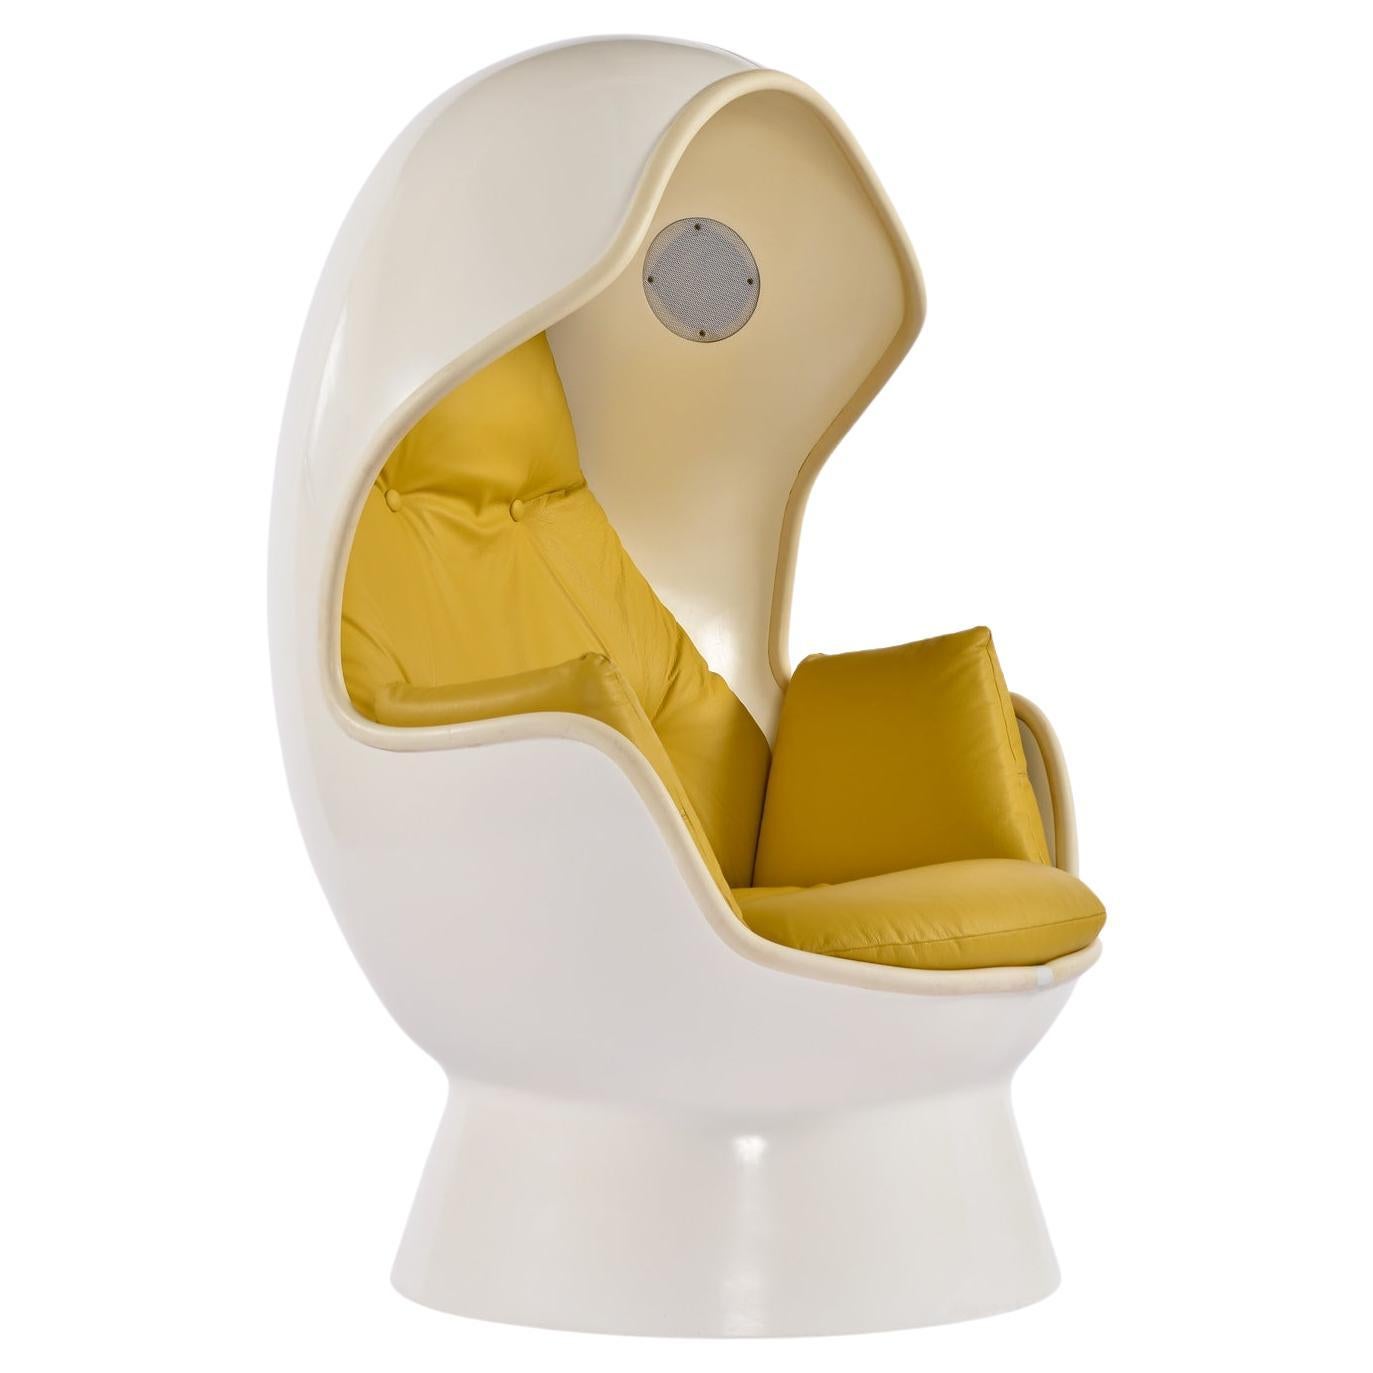 panasonic egg chair